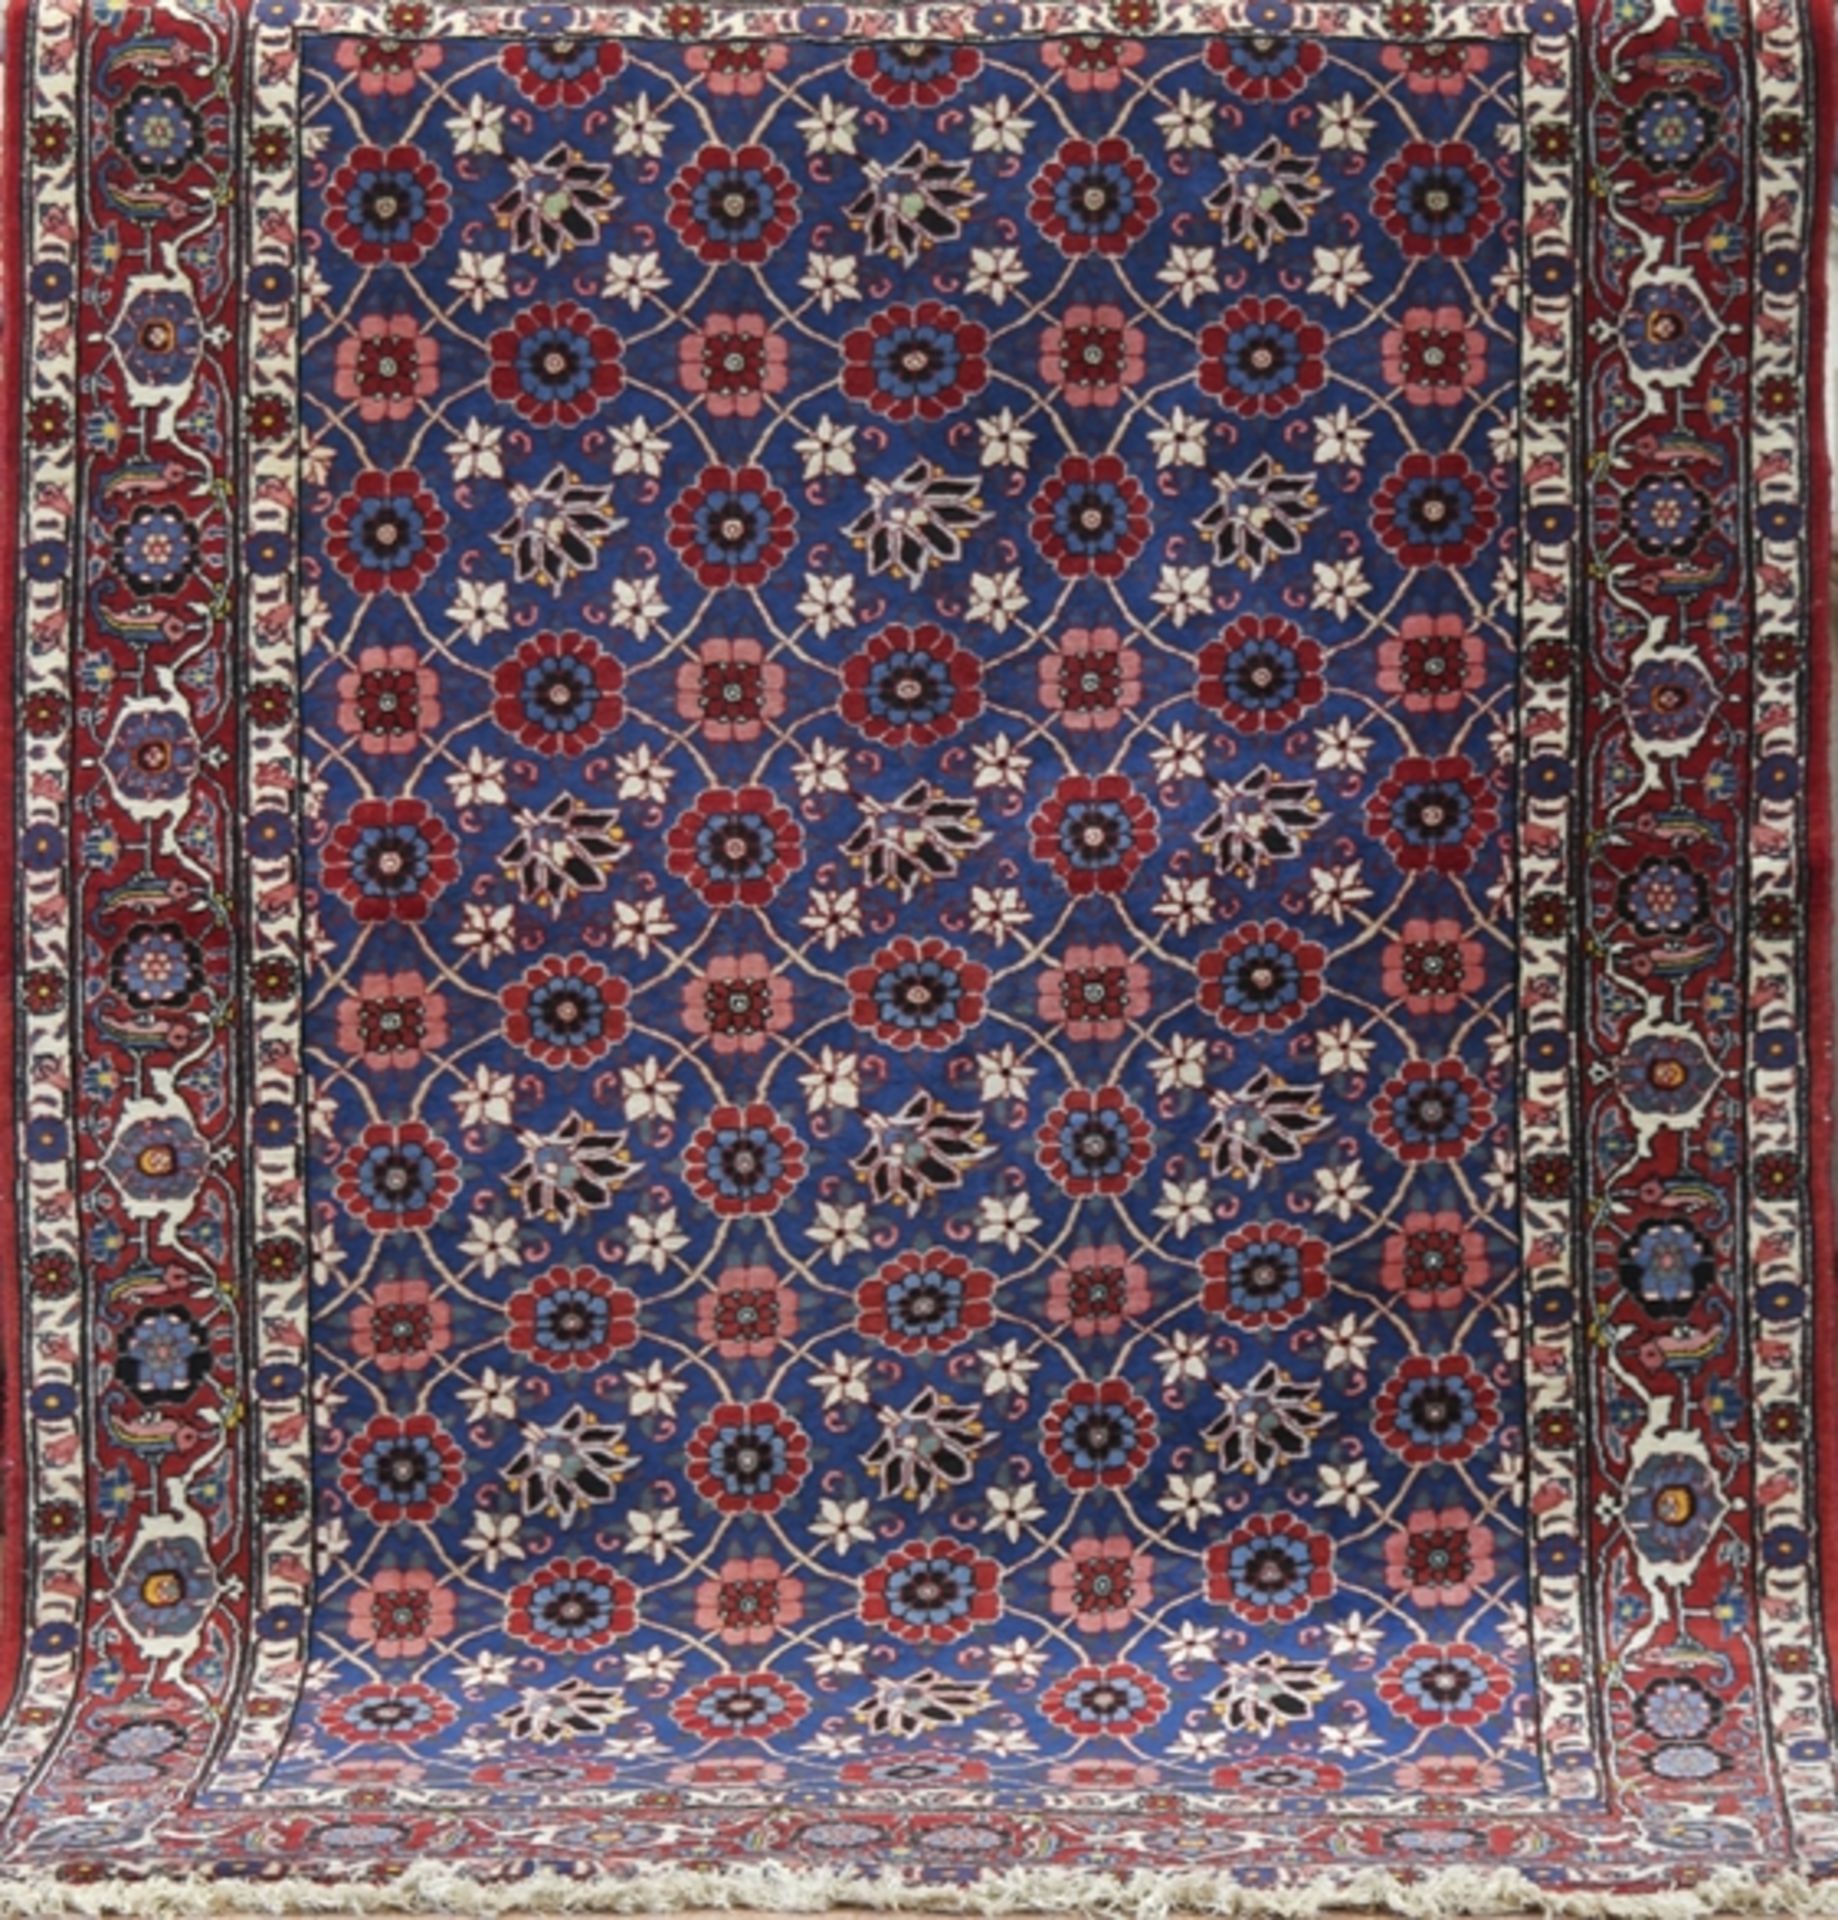 Veramin, Persien, blaugrundig mit Blumenmuster, 207x147 cm